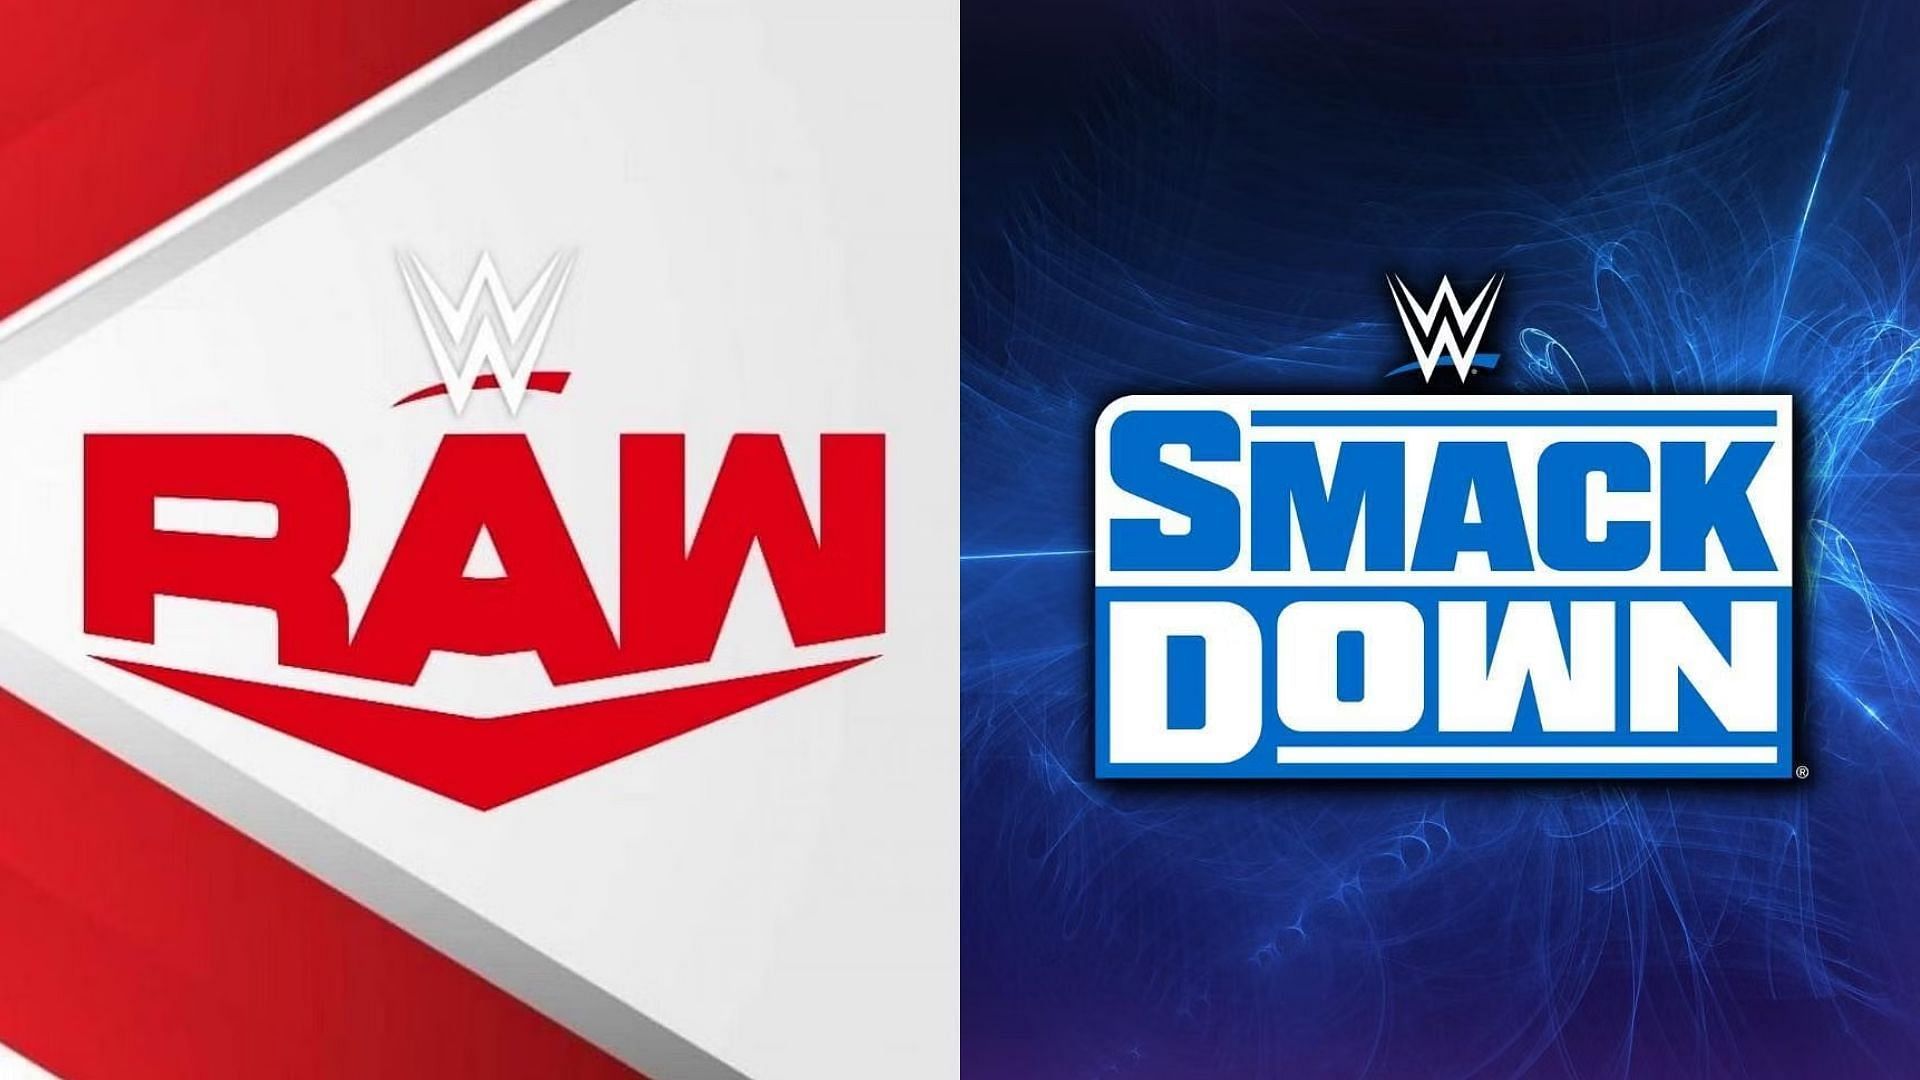 Will the brand warfare return on WWE TV?